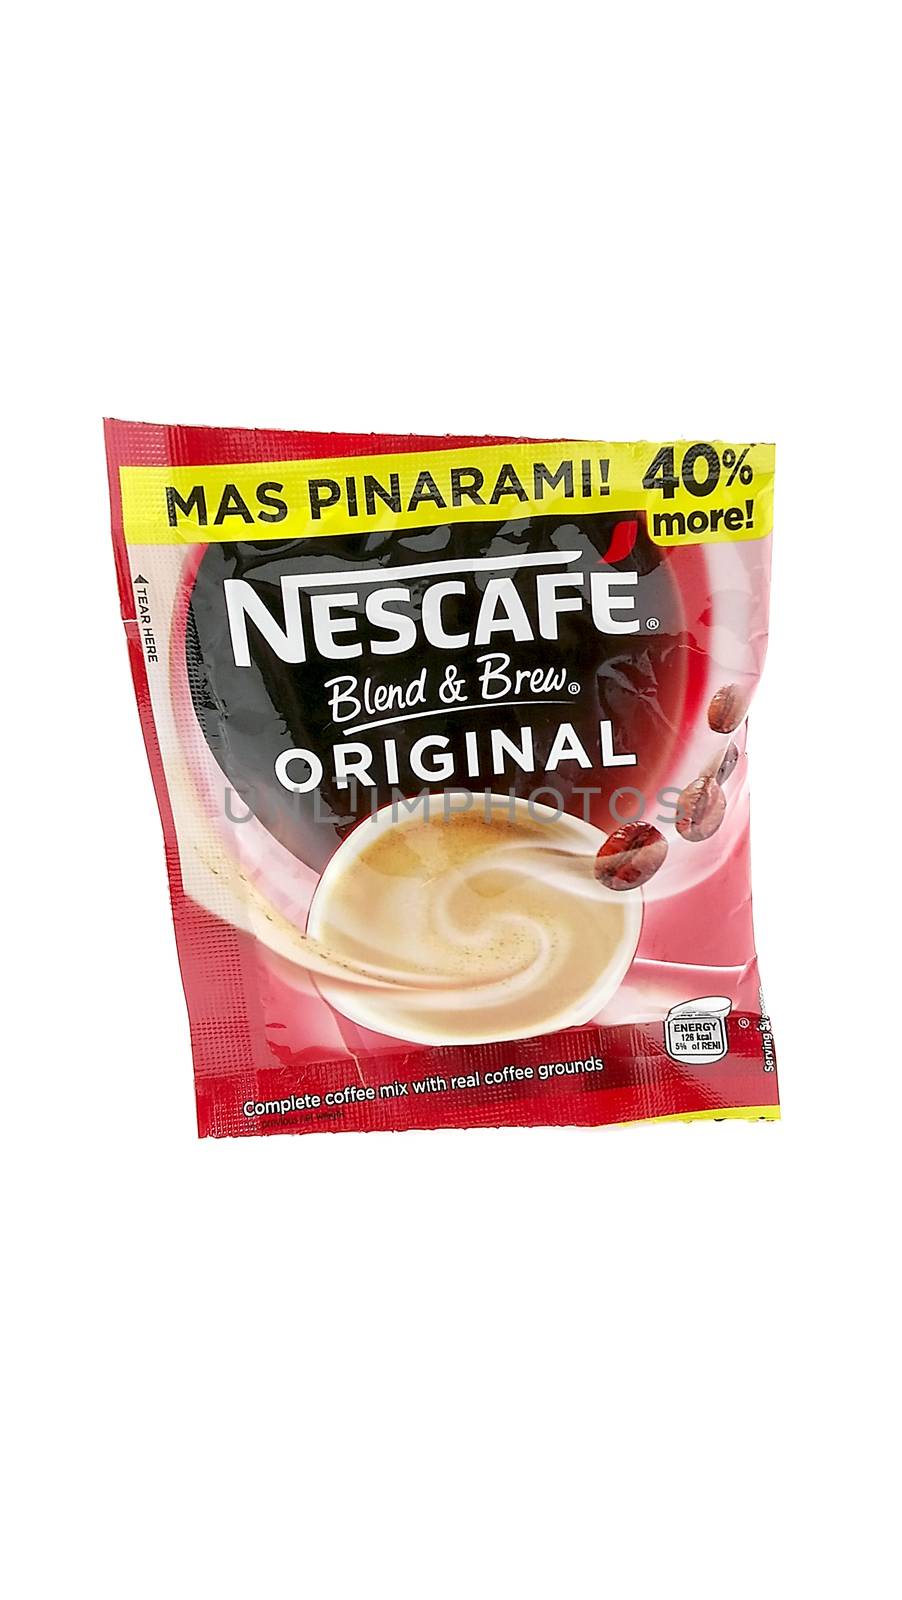 Nescafe blend and brew original coffee sachet in Manila, Philipp by imwaltersy